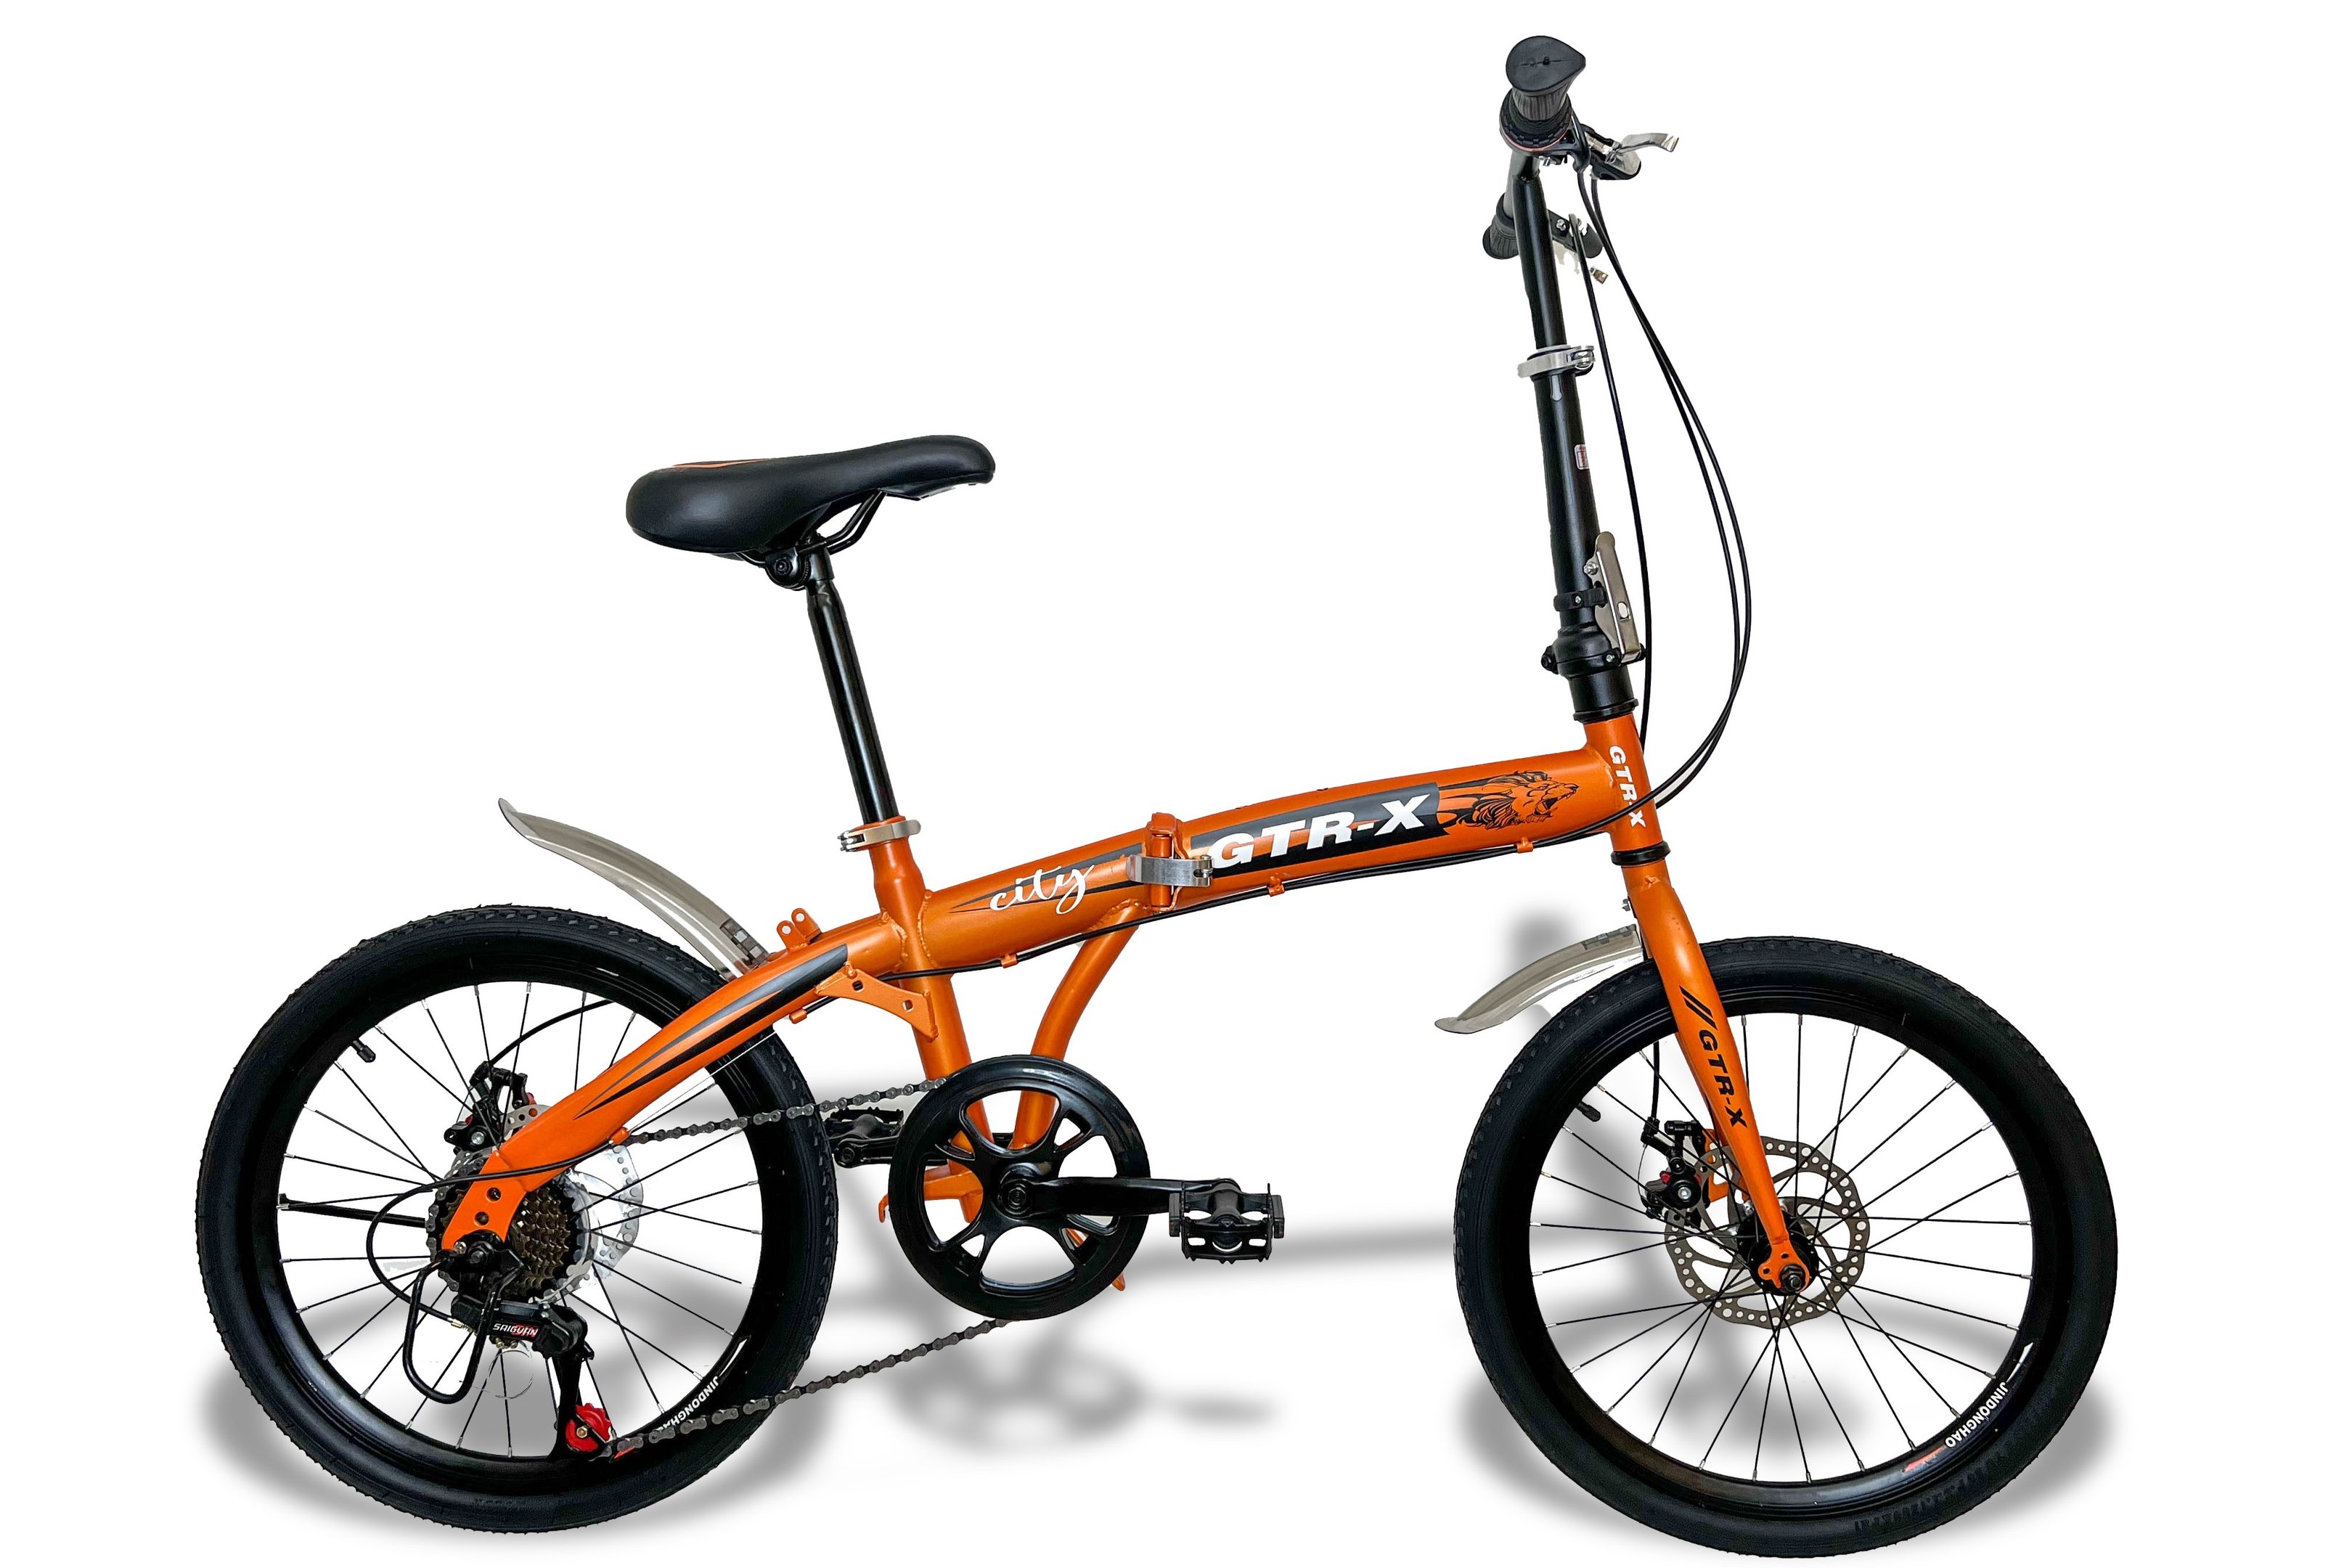 Bicicleta Dobrável GTR-X City Pliage Aro 20 Freios a Disco 7v - Laranja